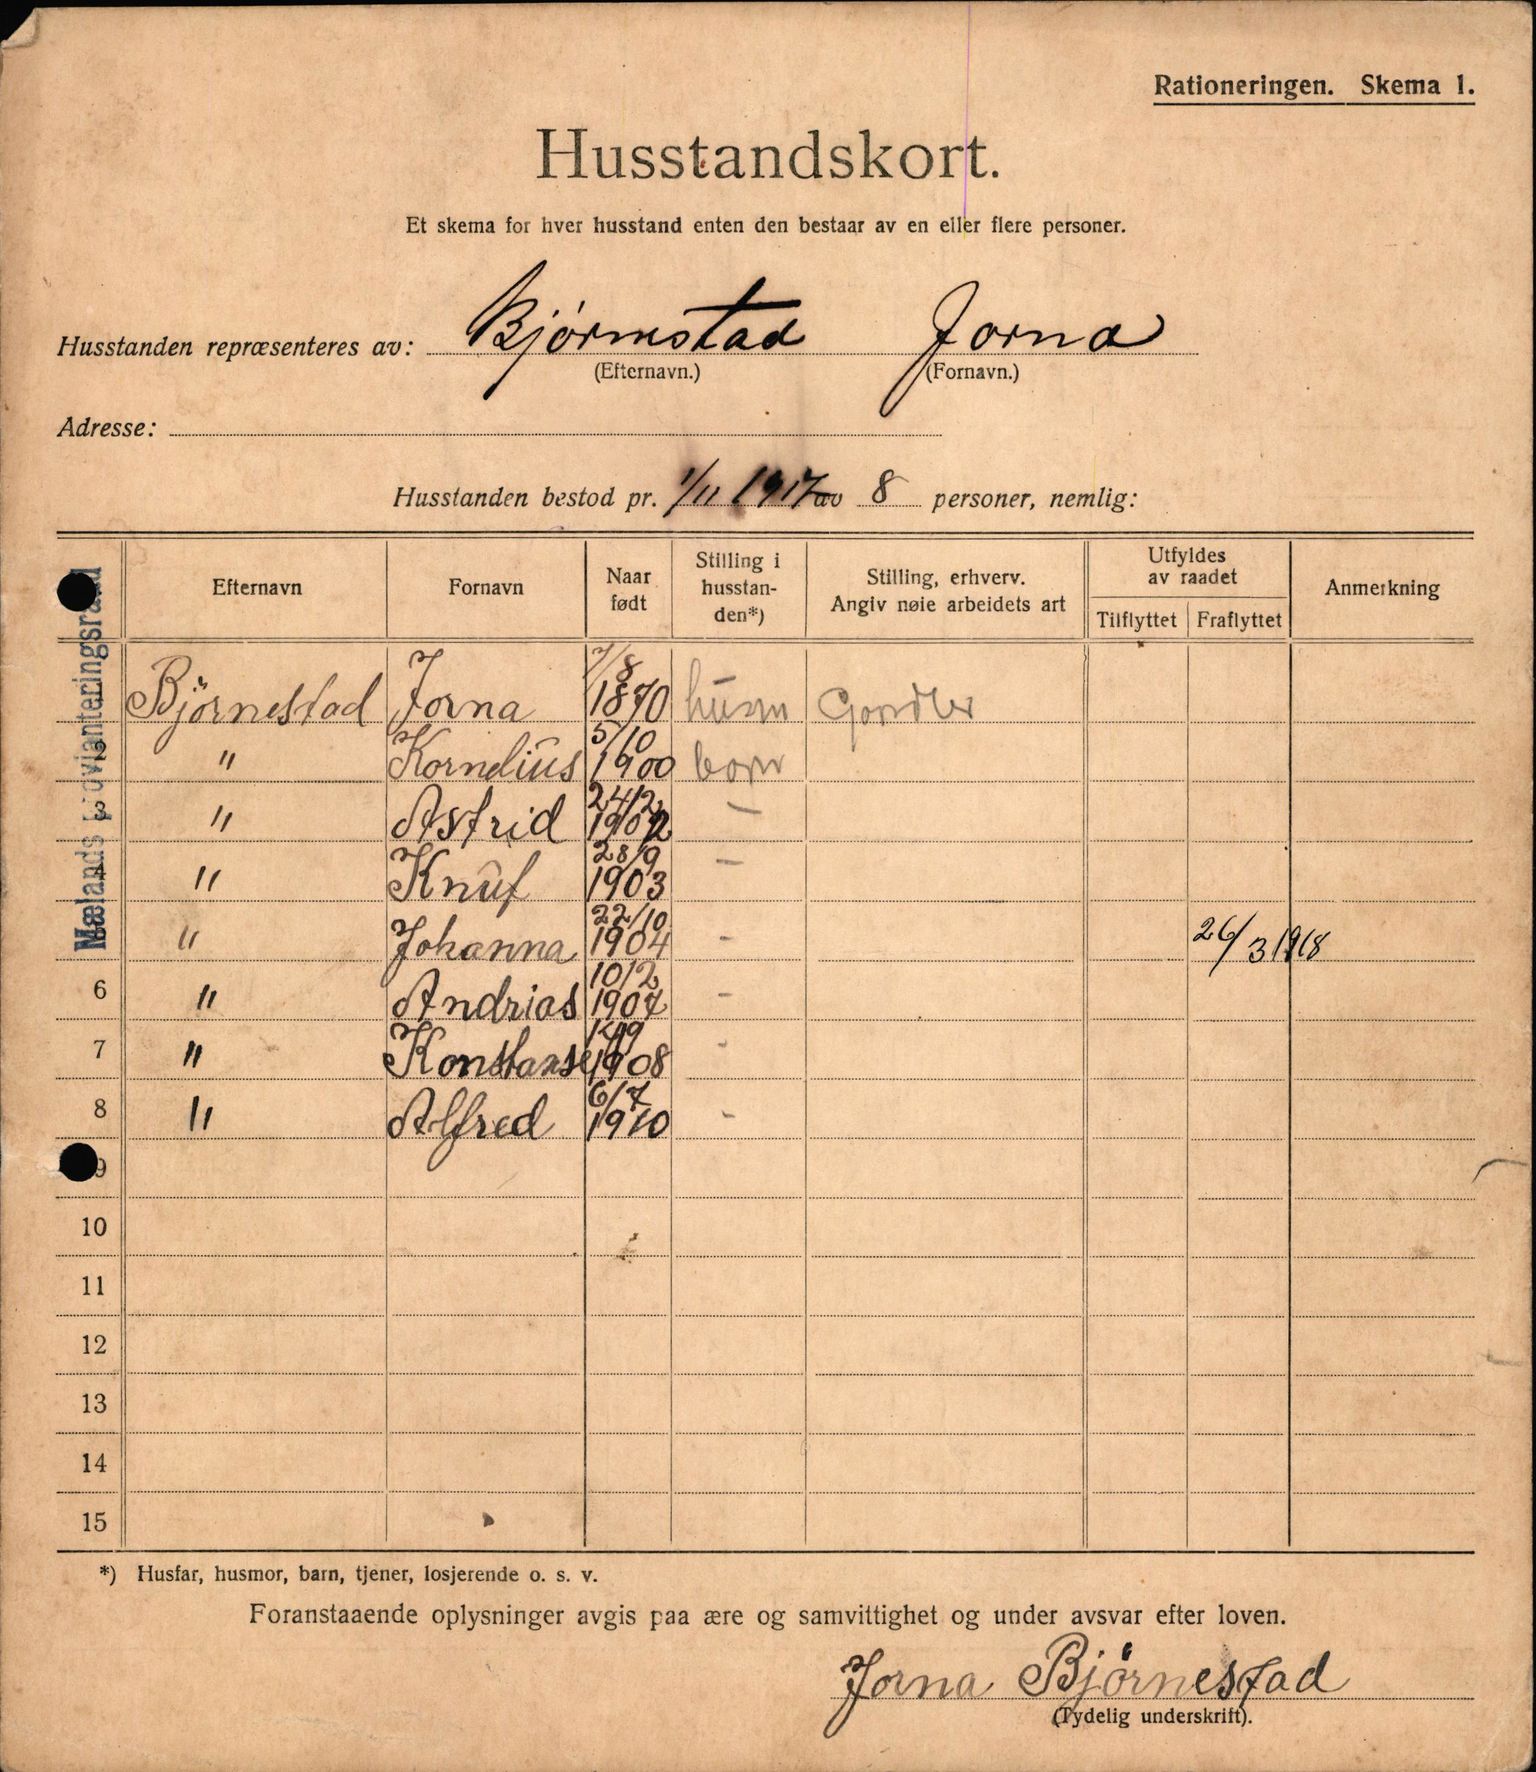 IKAH, Meland kommune, Provianteringsrådet, Husstander per 01.11.1917, 1917-1918, s. 83